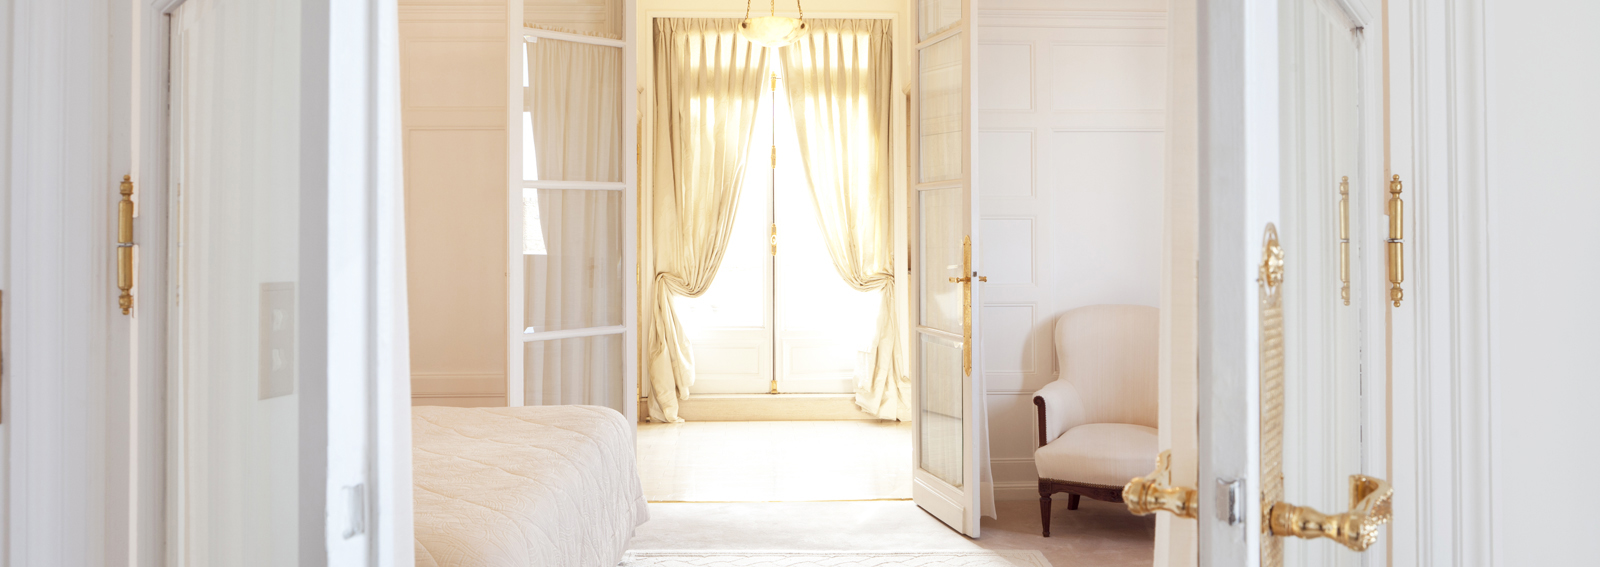 Luxury Bedroom Suite in Paris